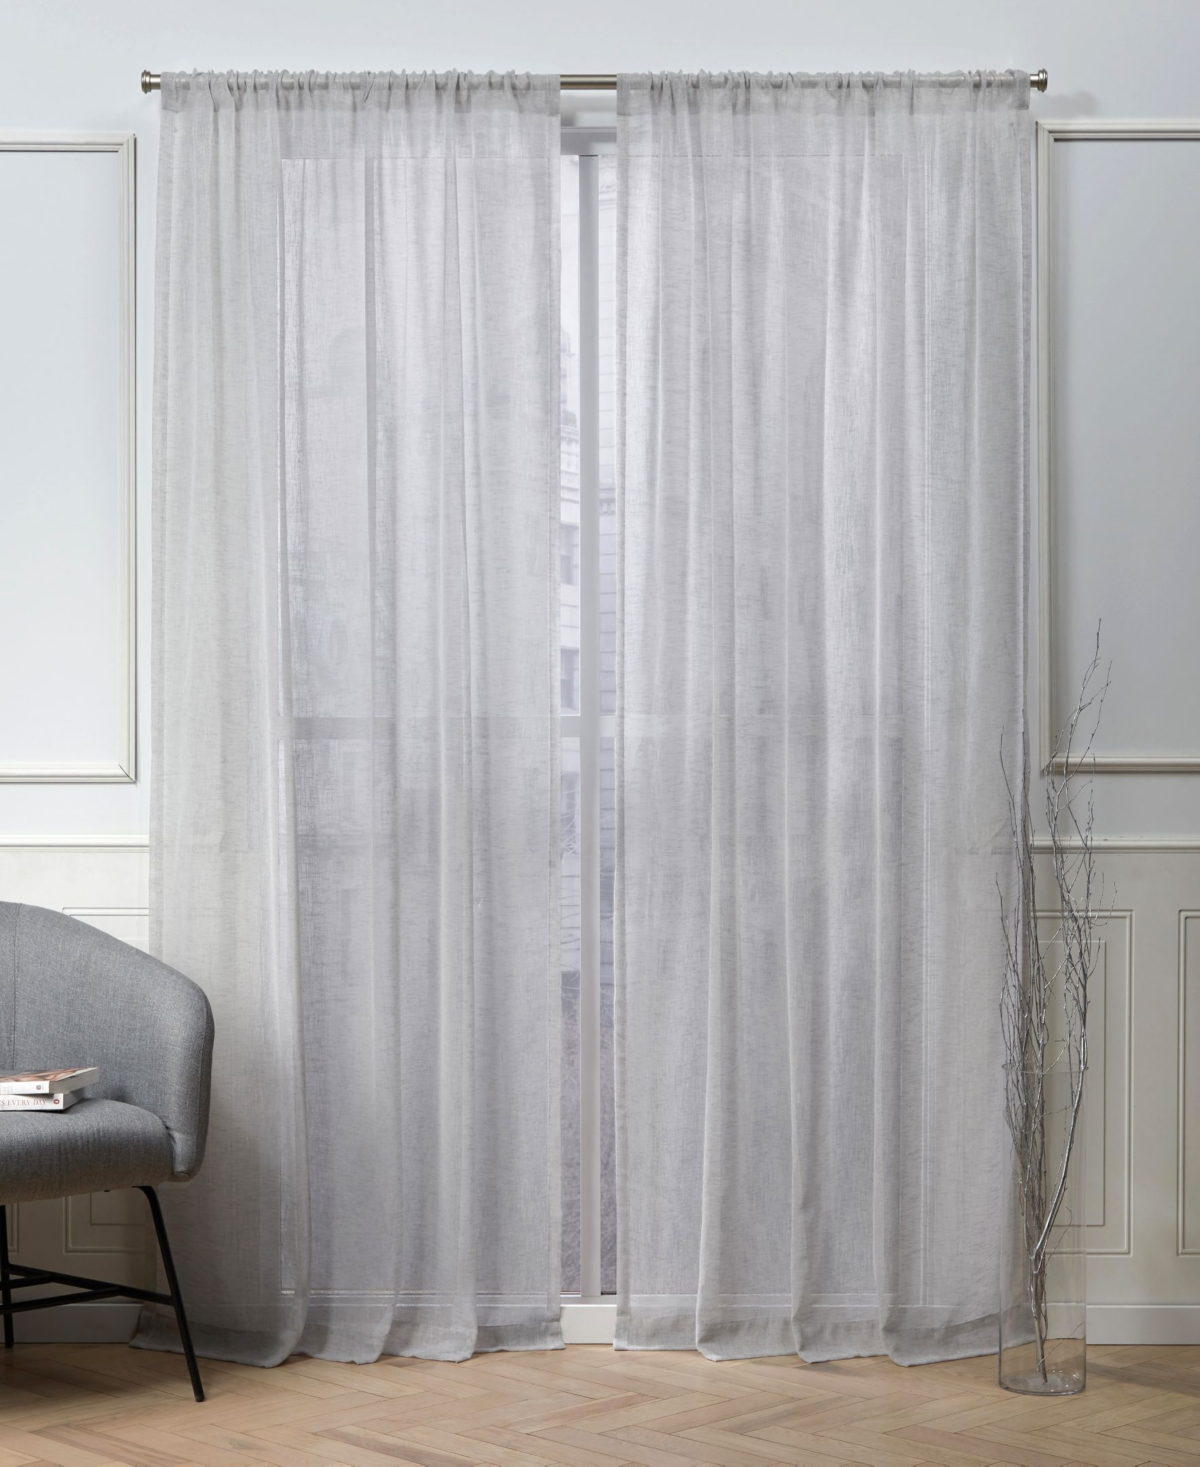 Belfry Sheer Rod Pocket Top 50" X 96" Curtain Panel Pair - Silver